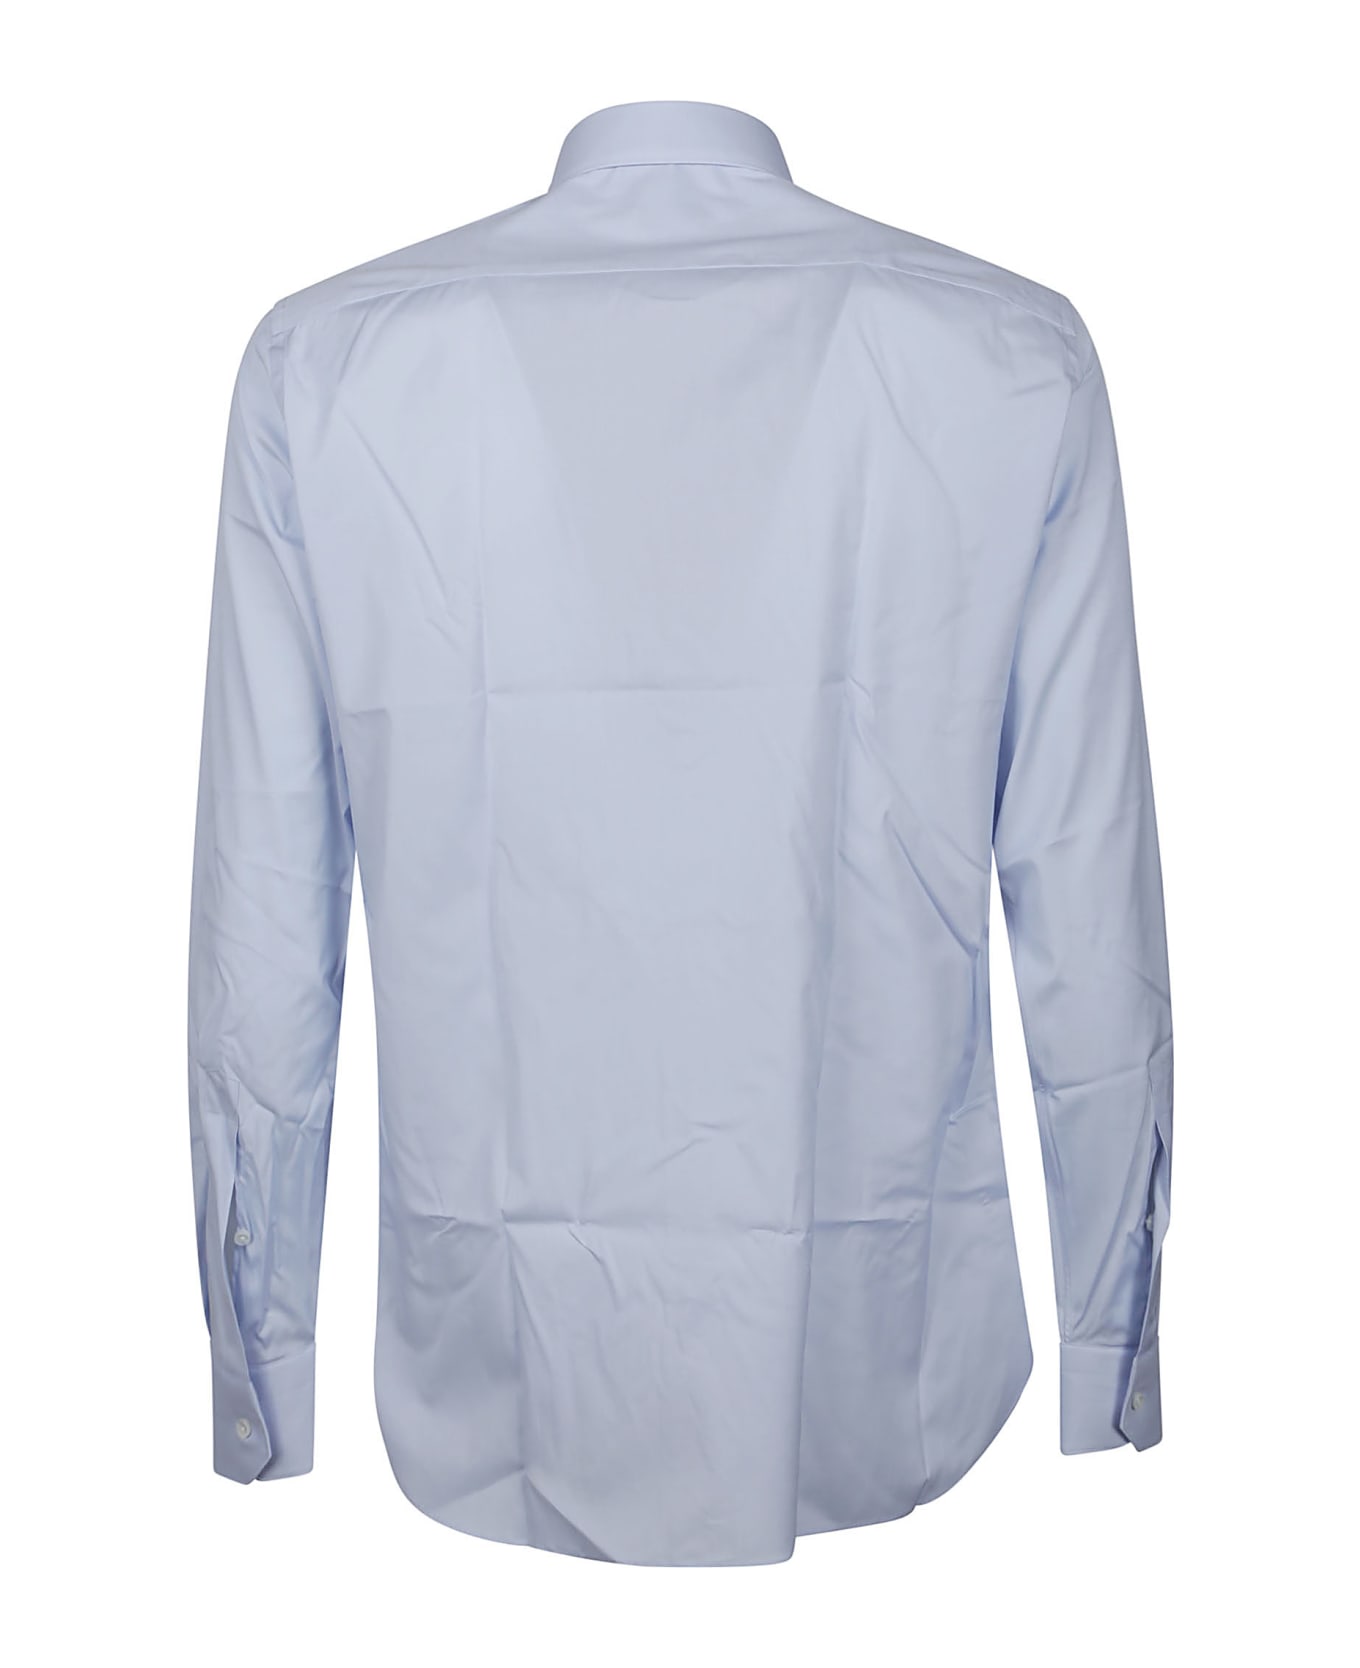 Zegna Long Sleeve Shirt - Azzurro